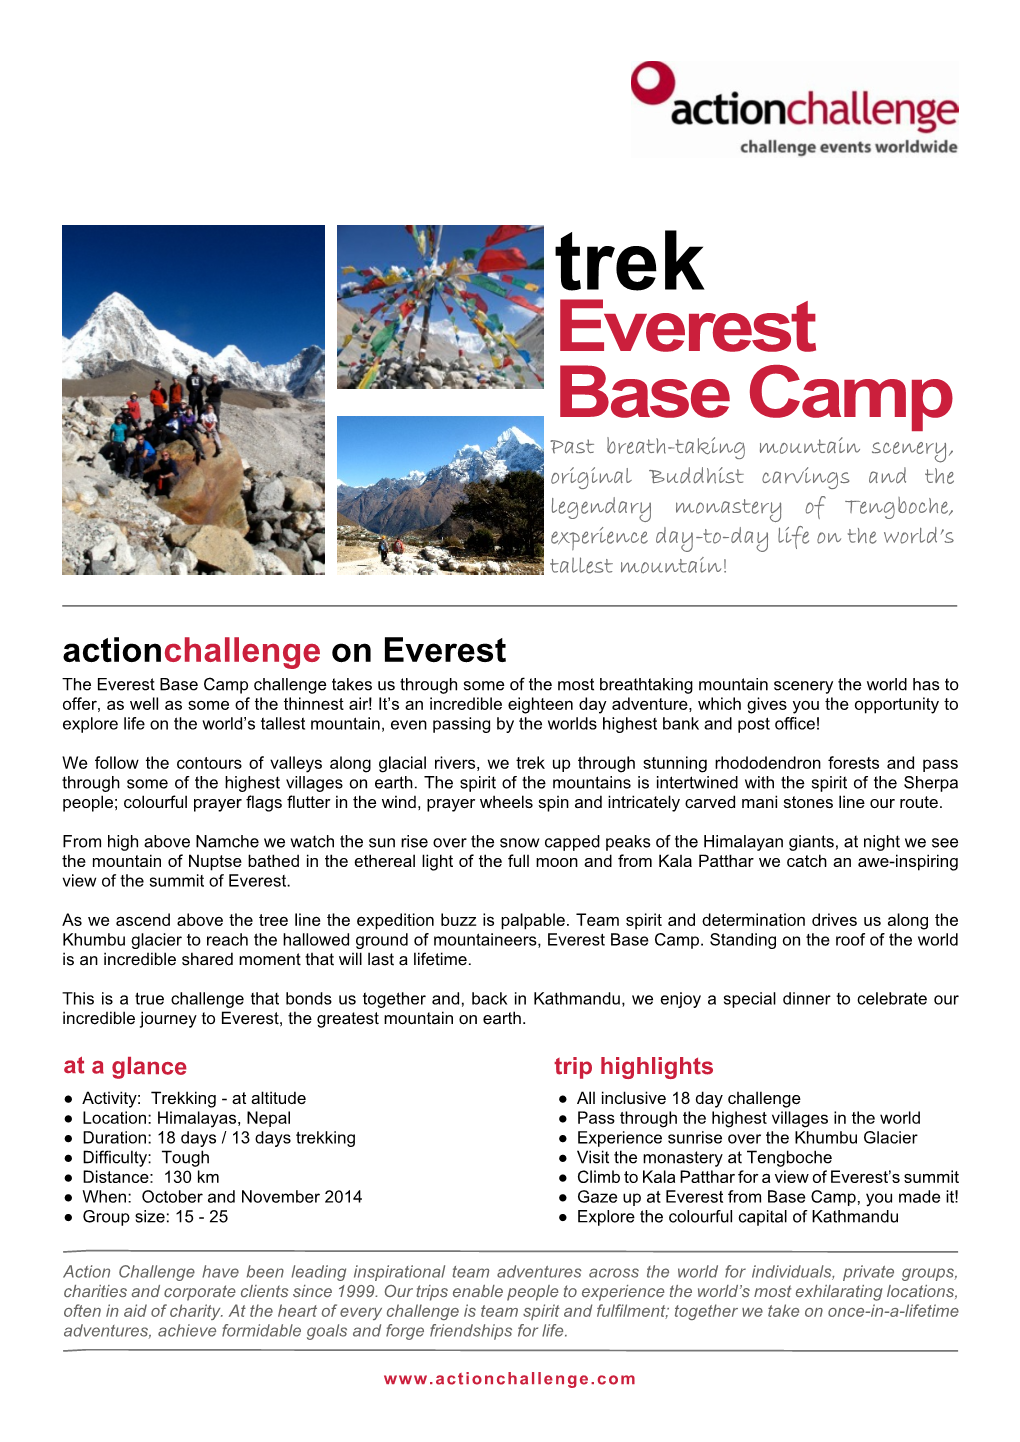 Trek Everest Base Camp